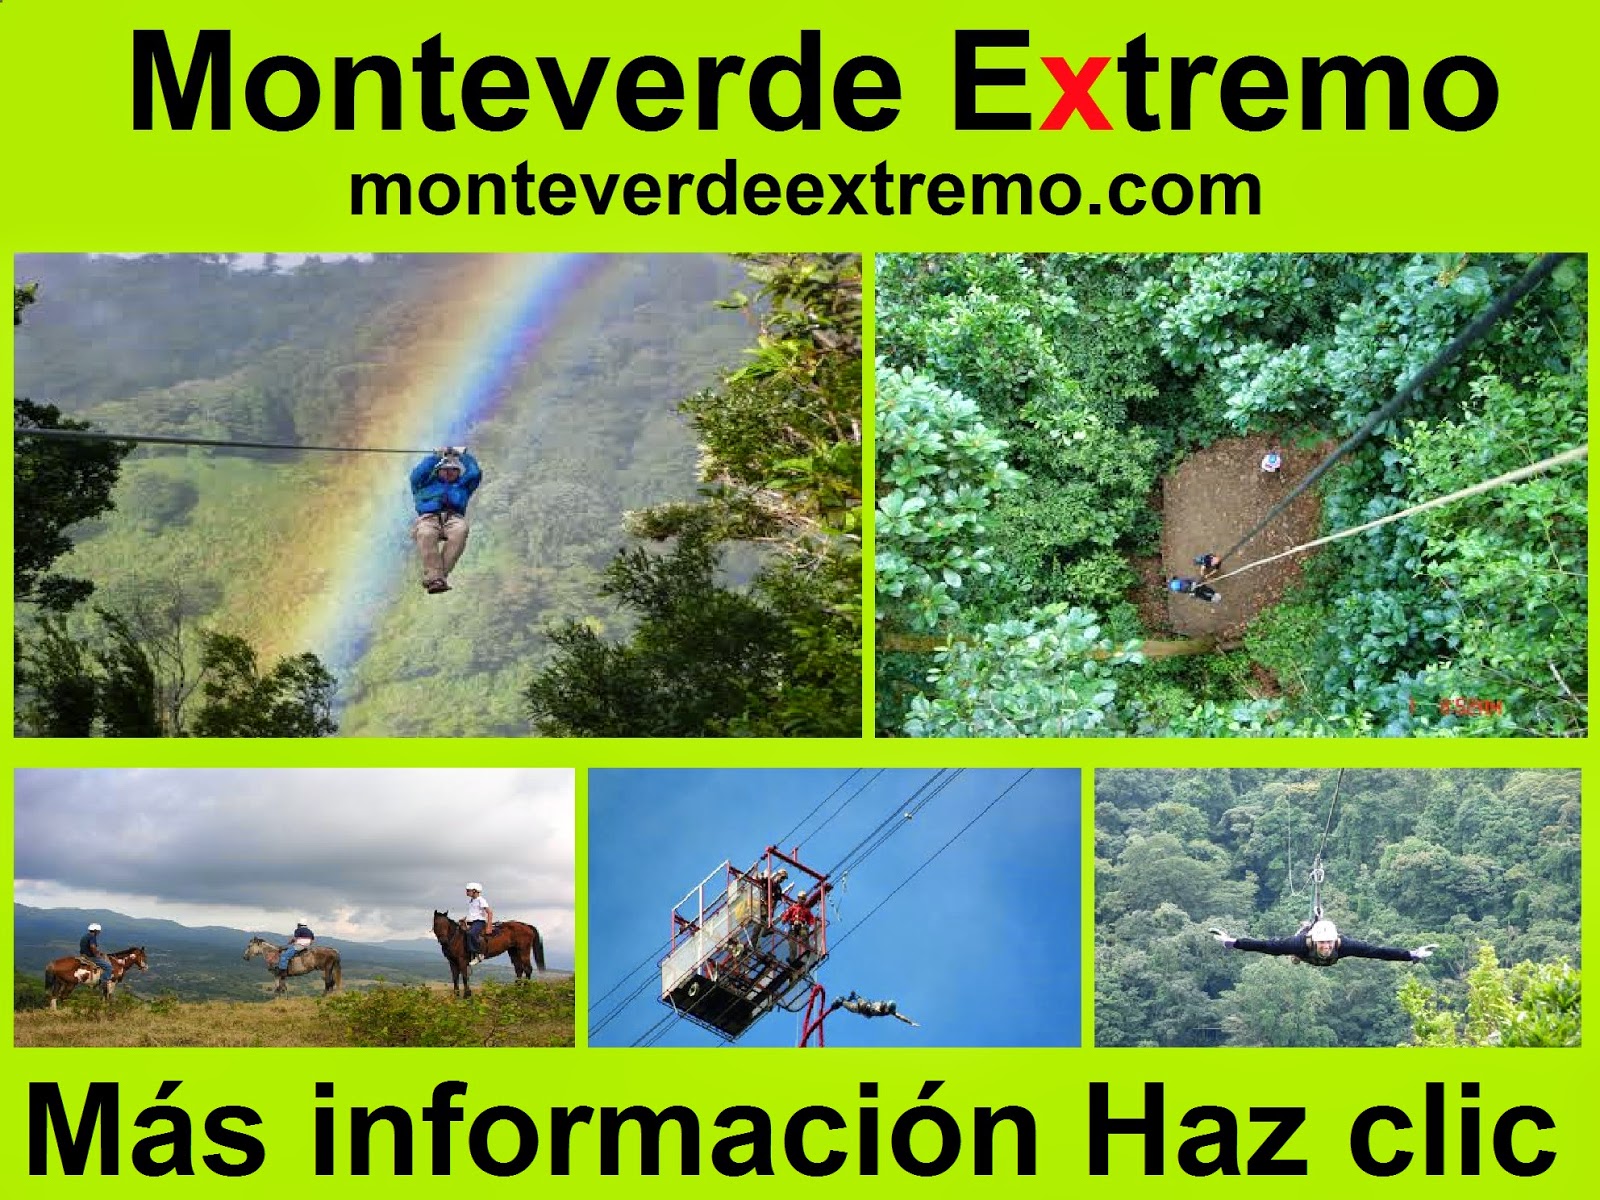 http://www.monteverdeextremo.com/